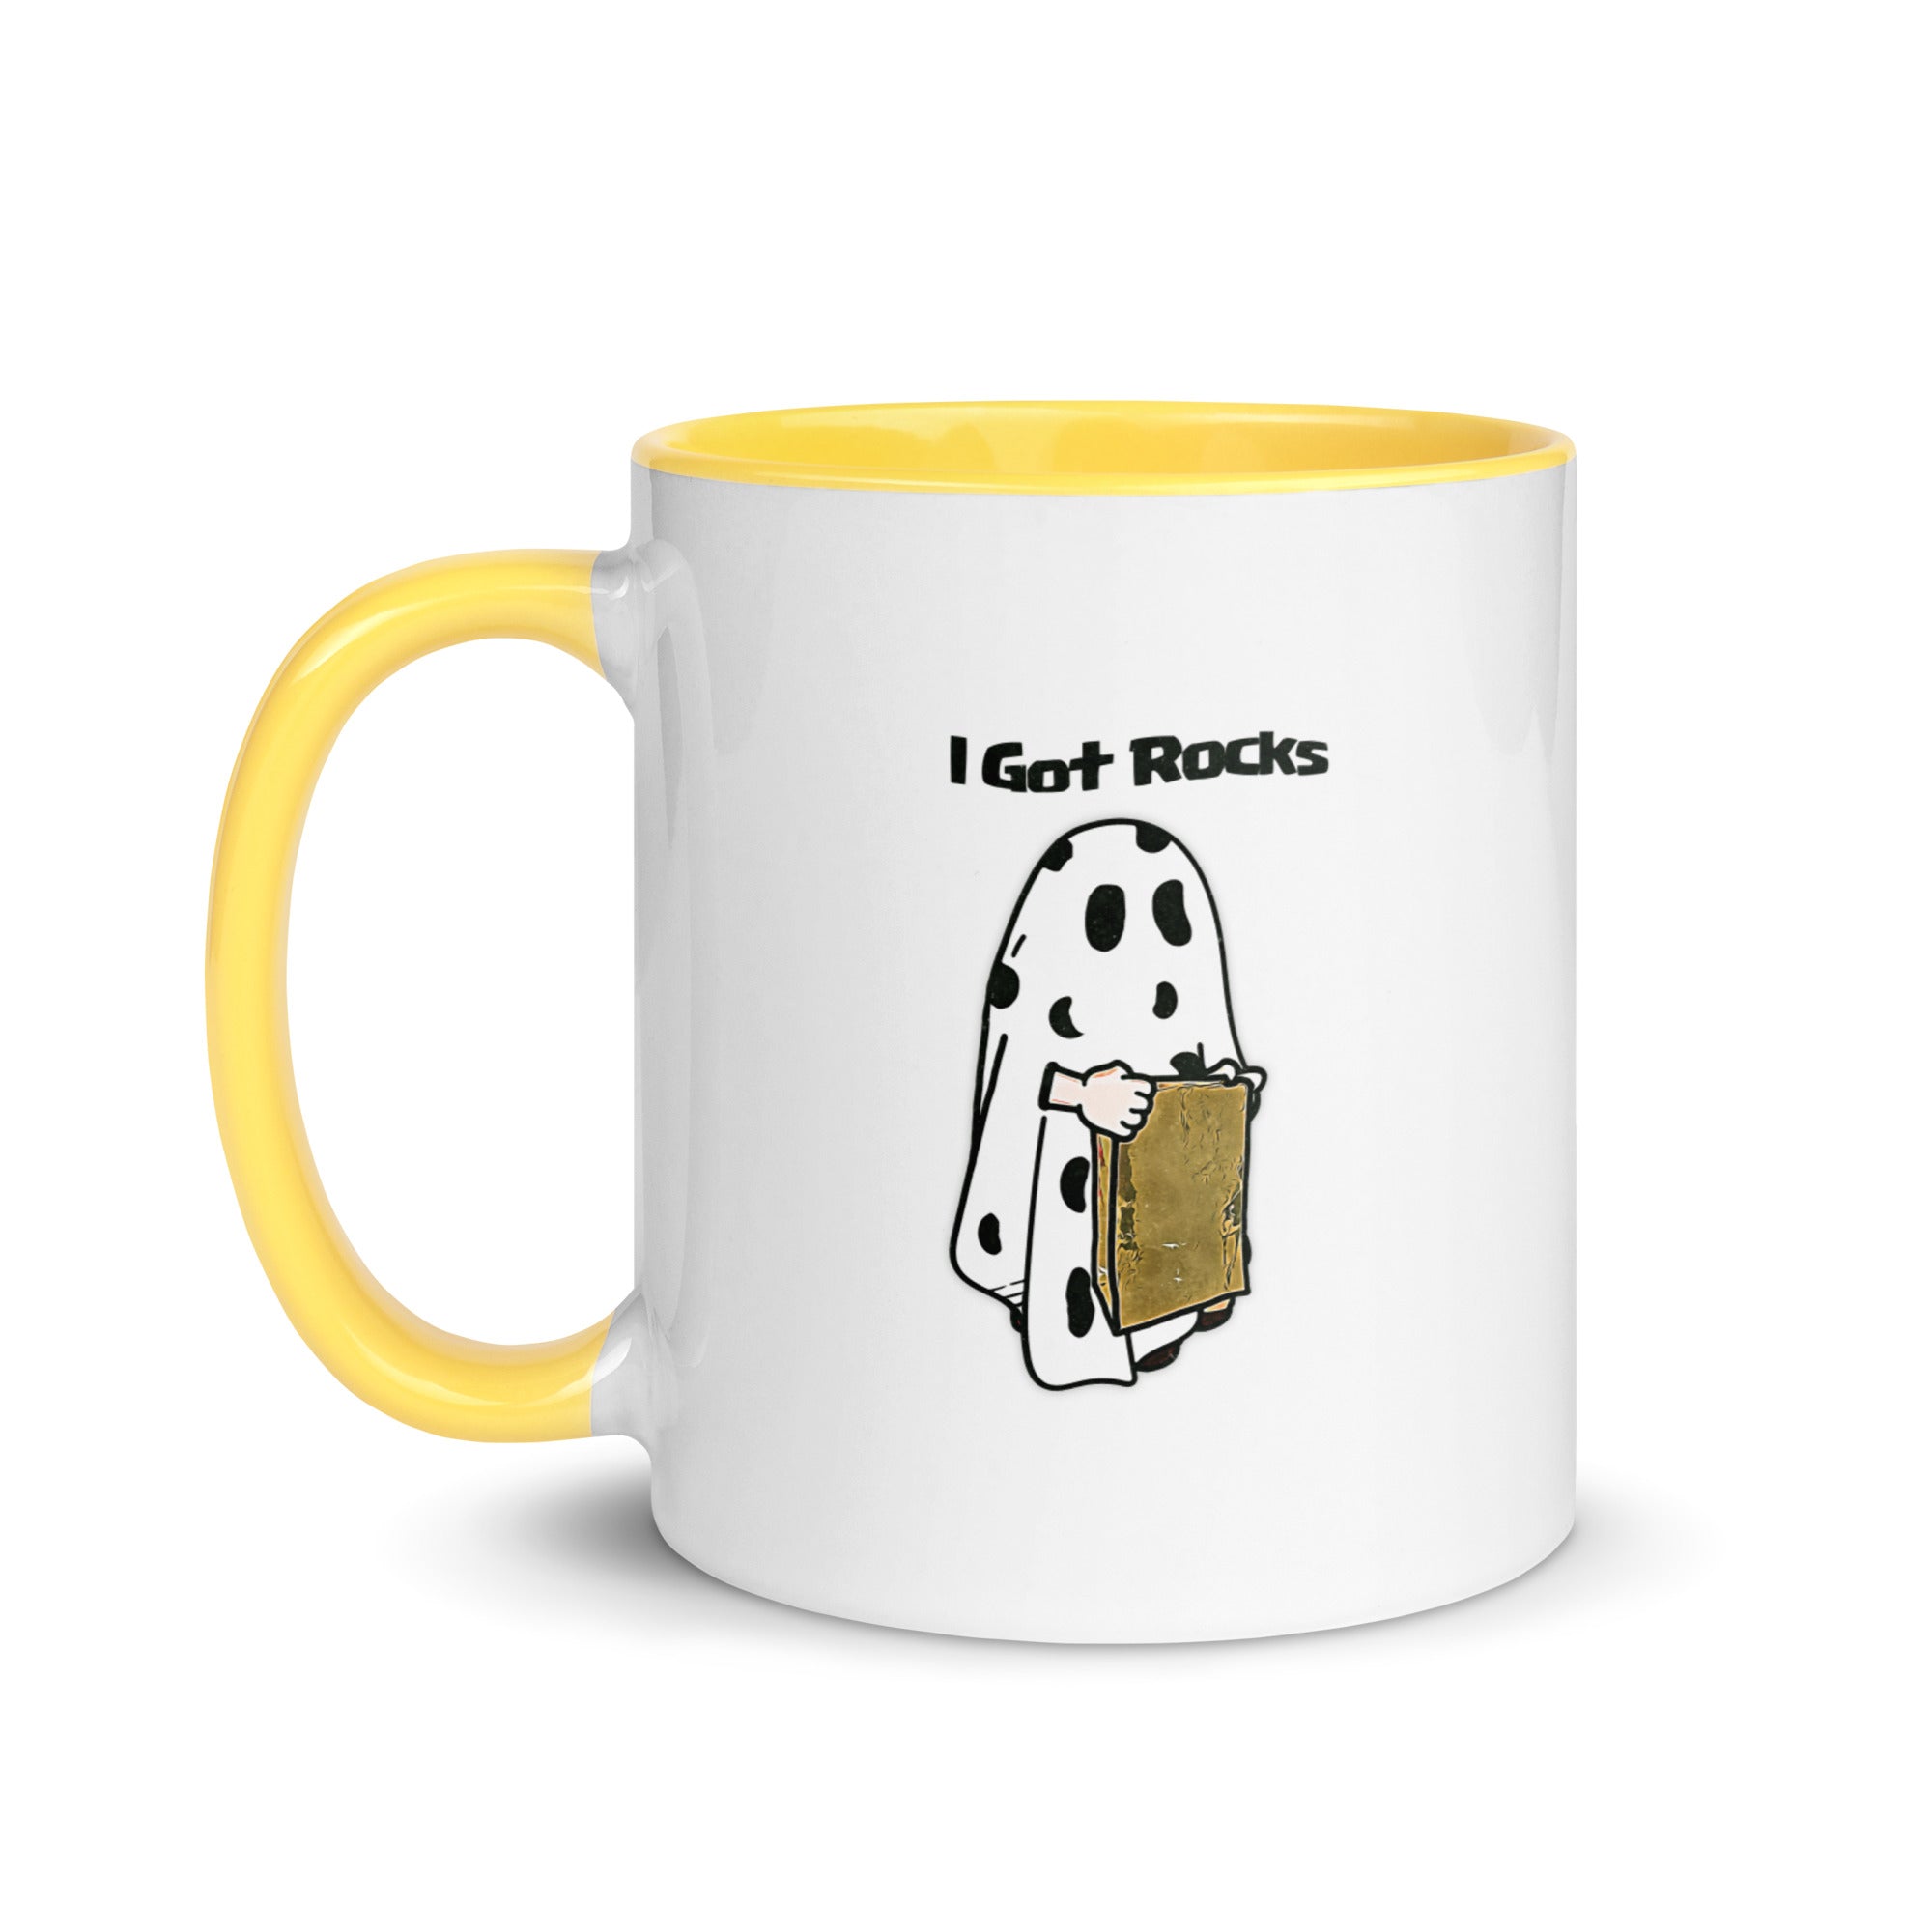 a white and orange coffee mug with a cartoon of a ghost holding a box